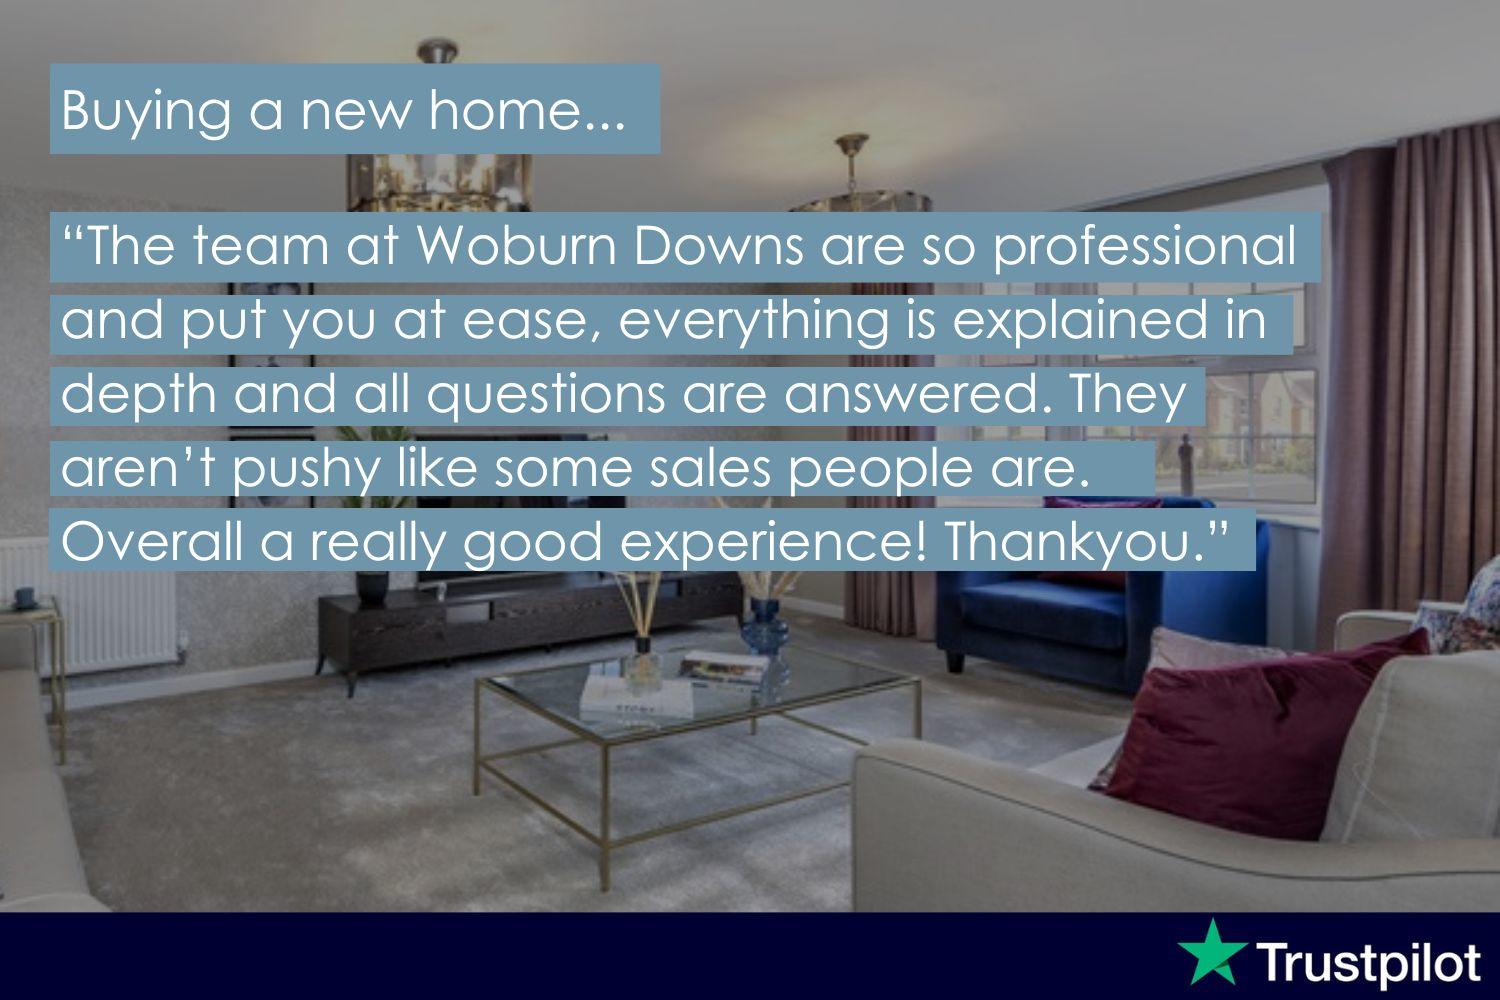 David Wilson Homes - Woburn Downs